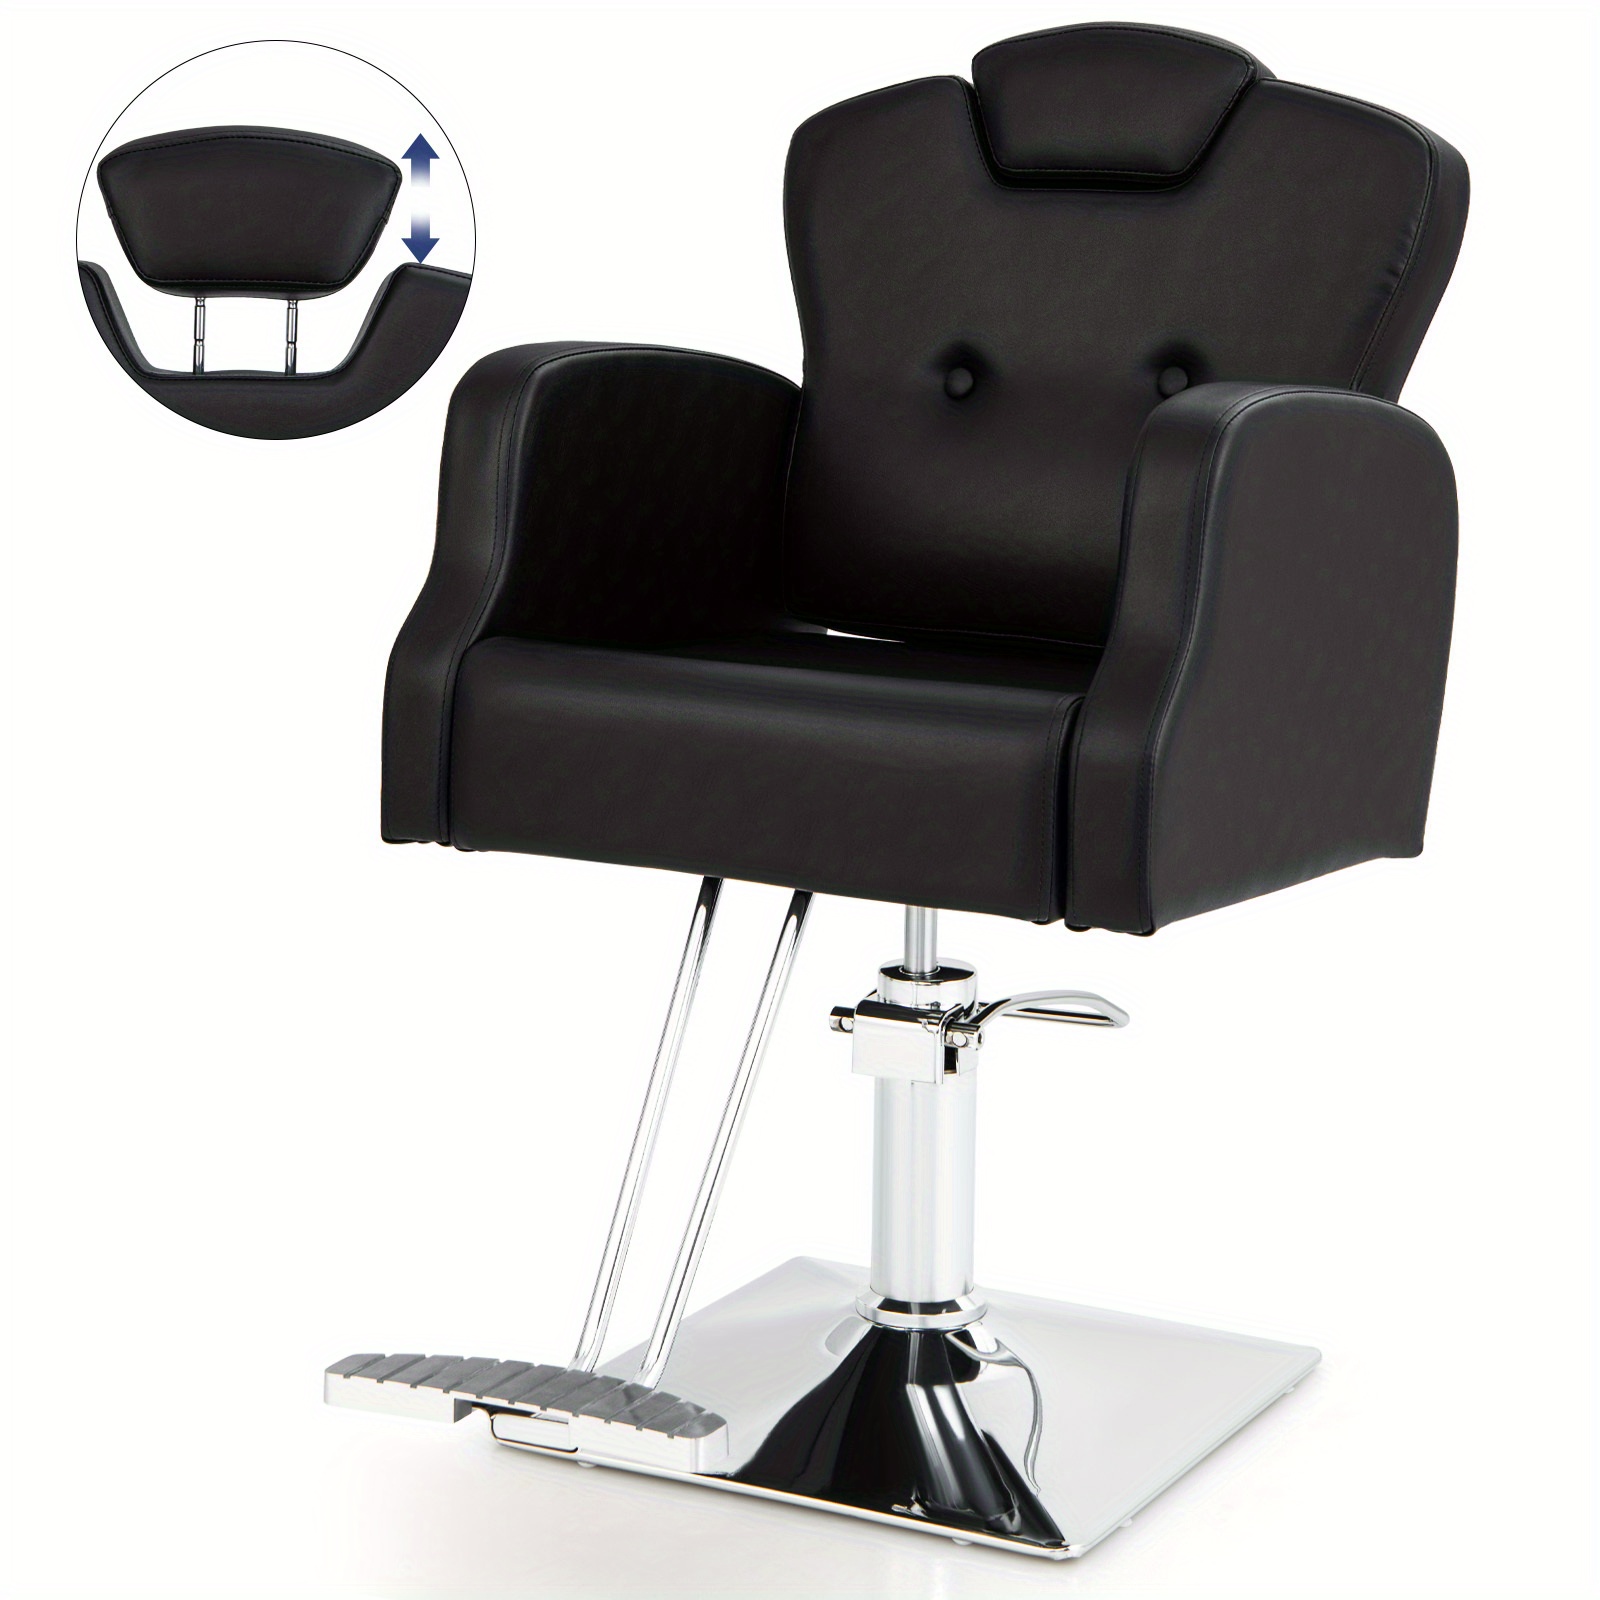 

Safstar Hydraulic 360 Degrees Swivel Salon Chairs W/ Adjustable Headrest